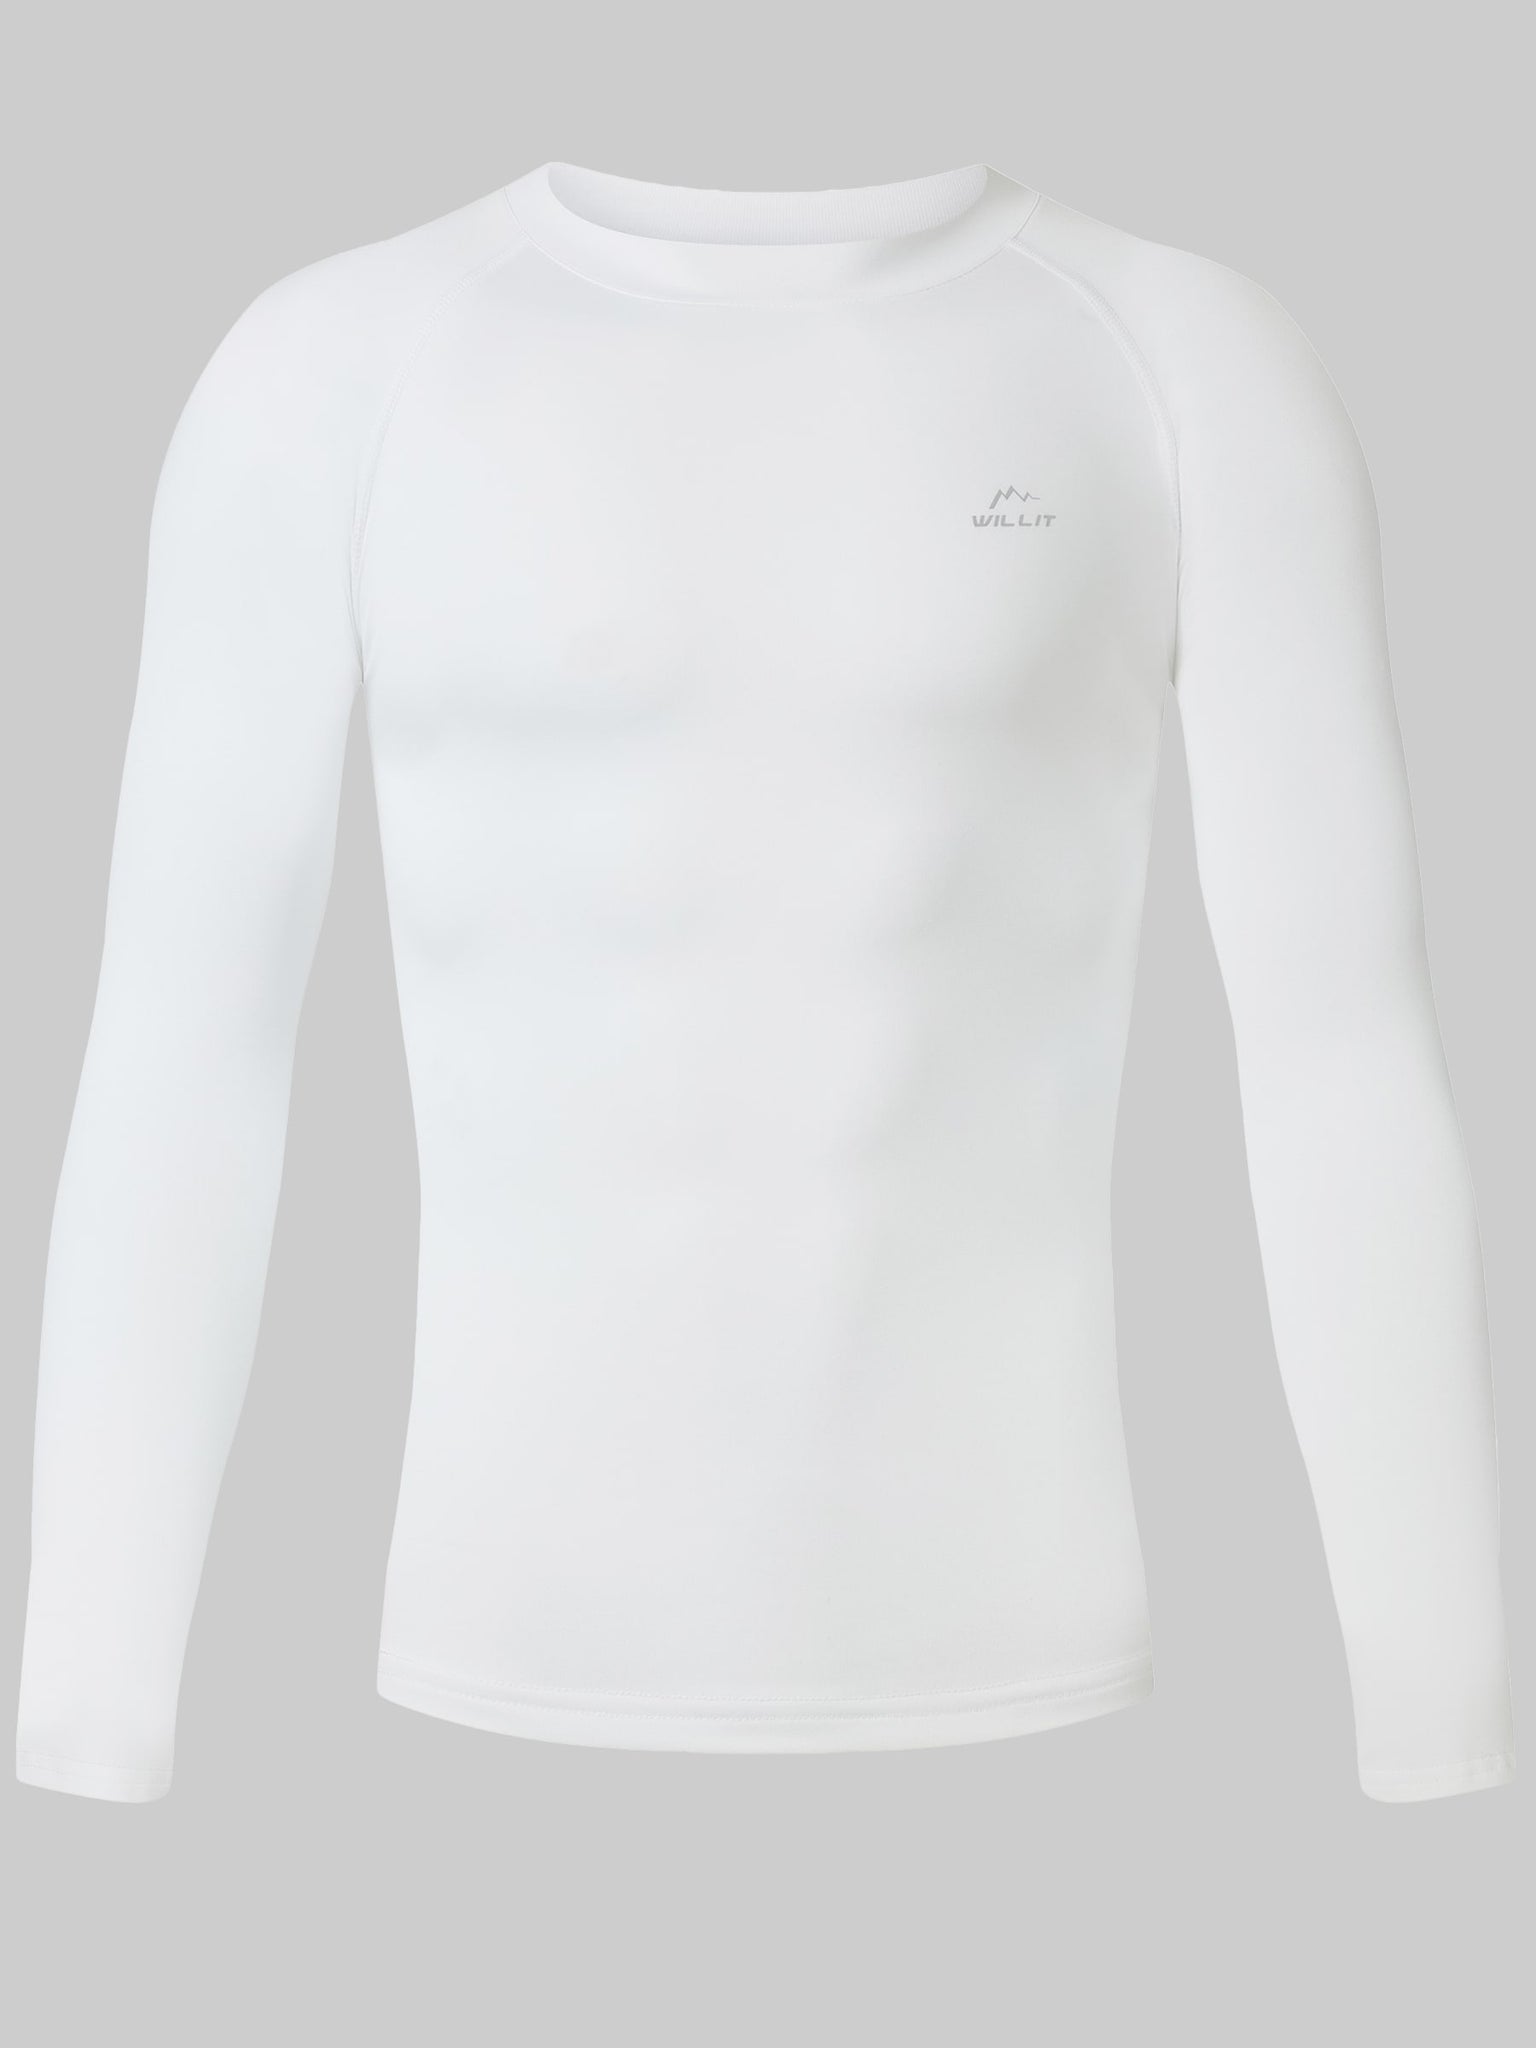 Boys Thermal Fleece Long-Sleeve Shirt_White1